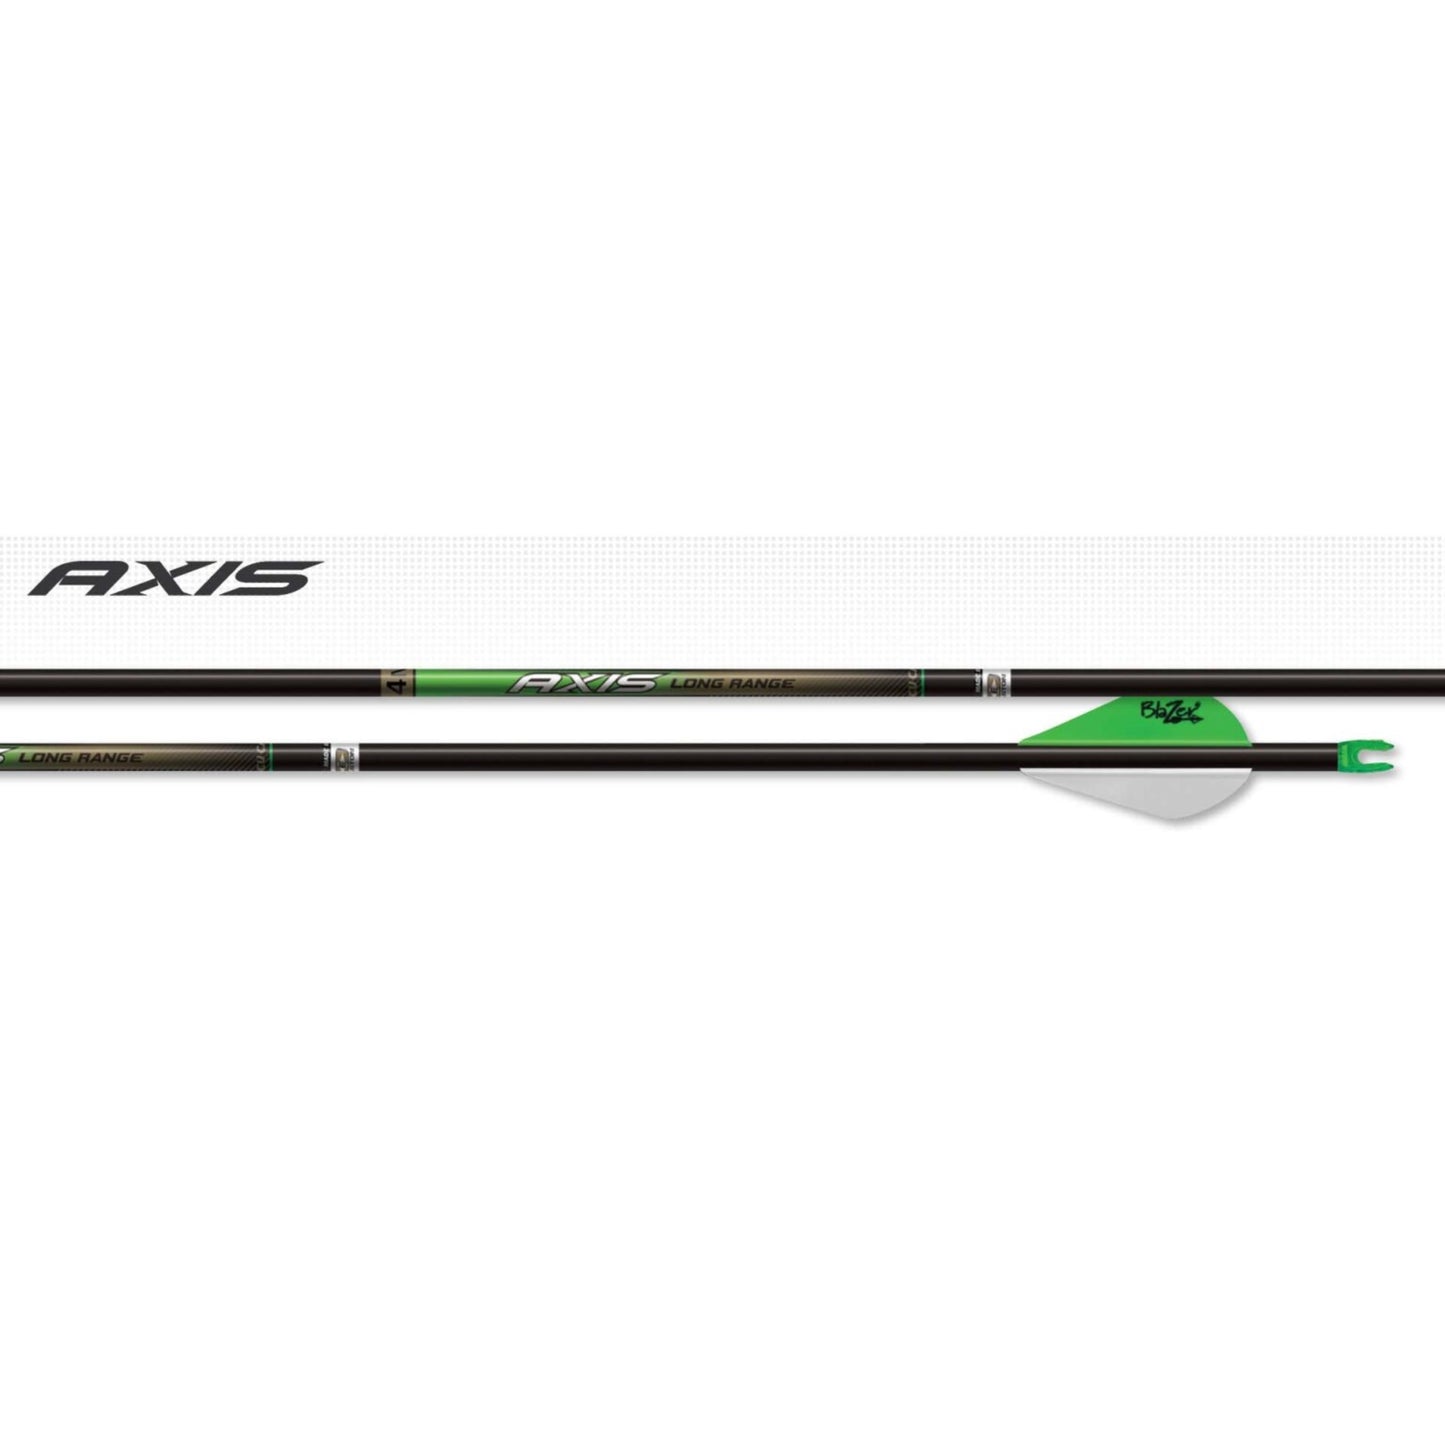 Easton axis 4mm long range arrows